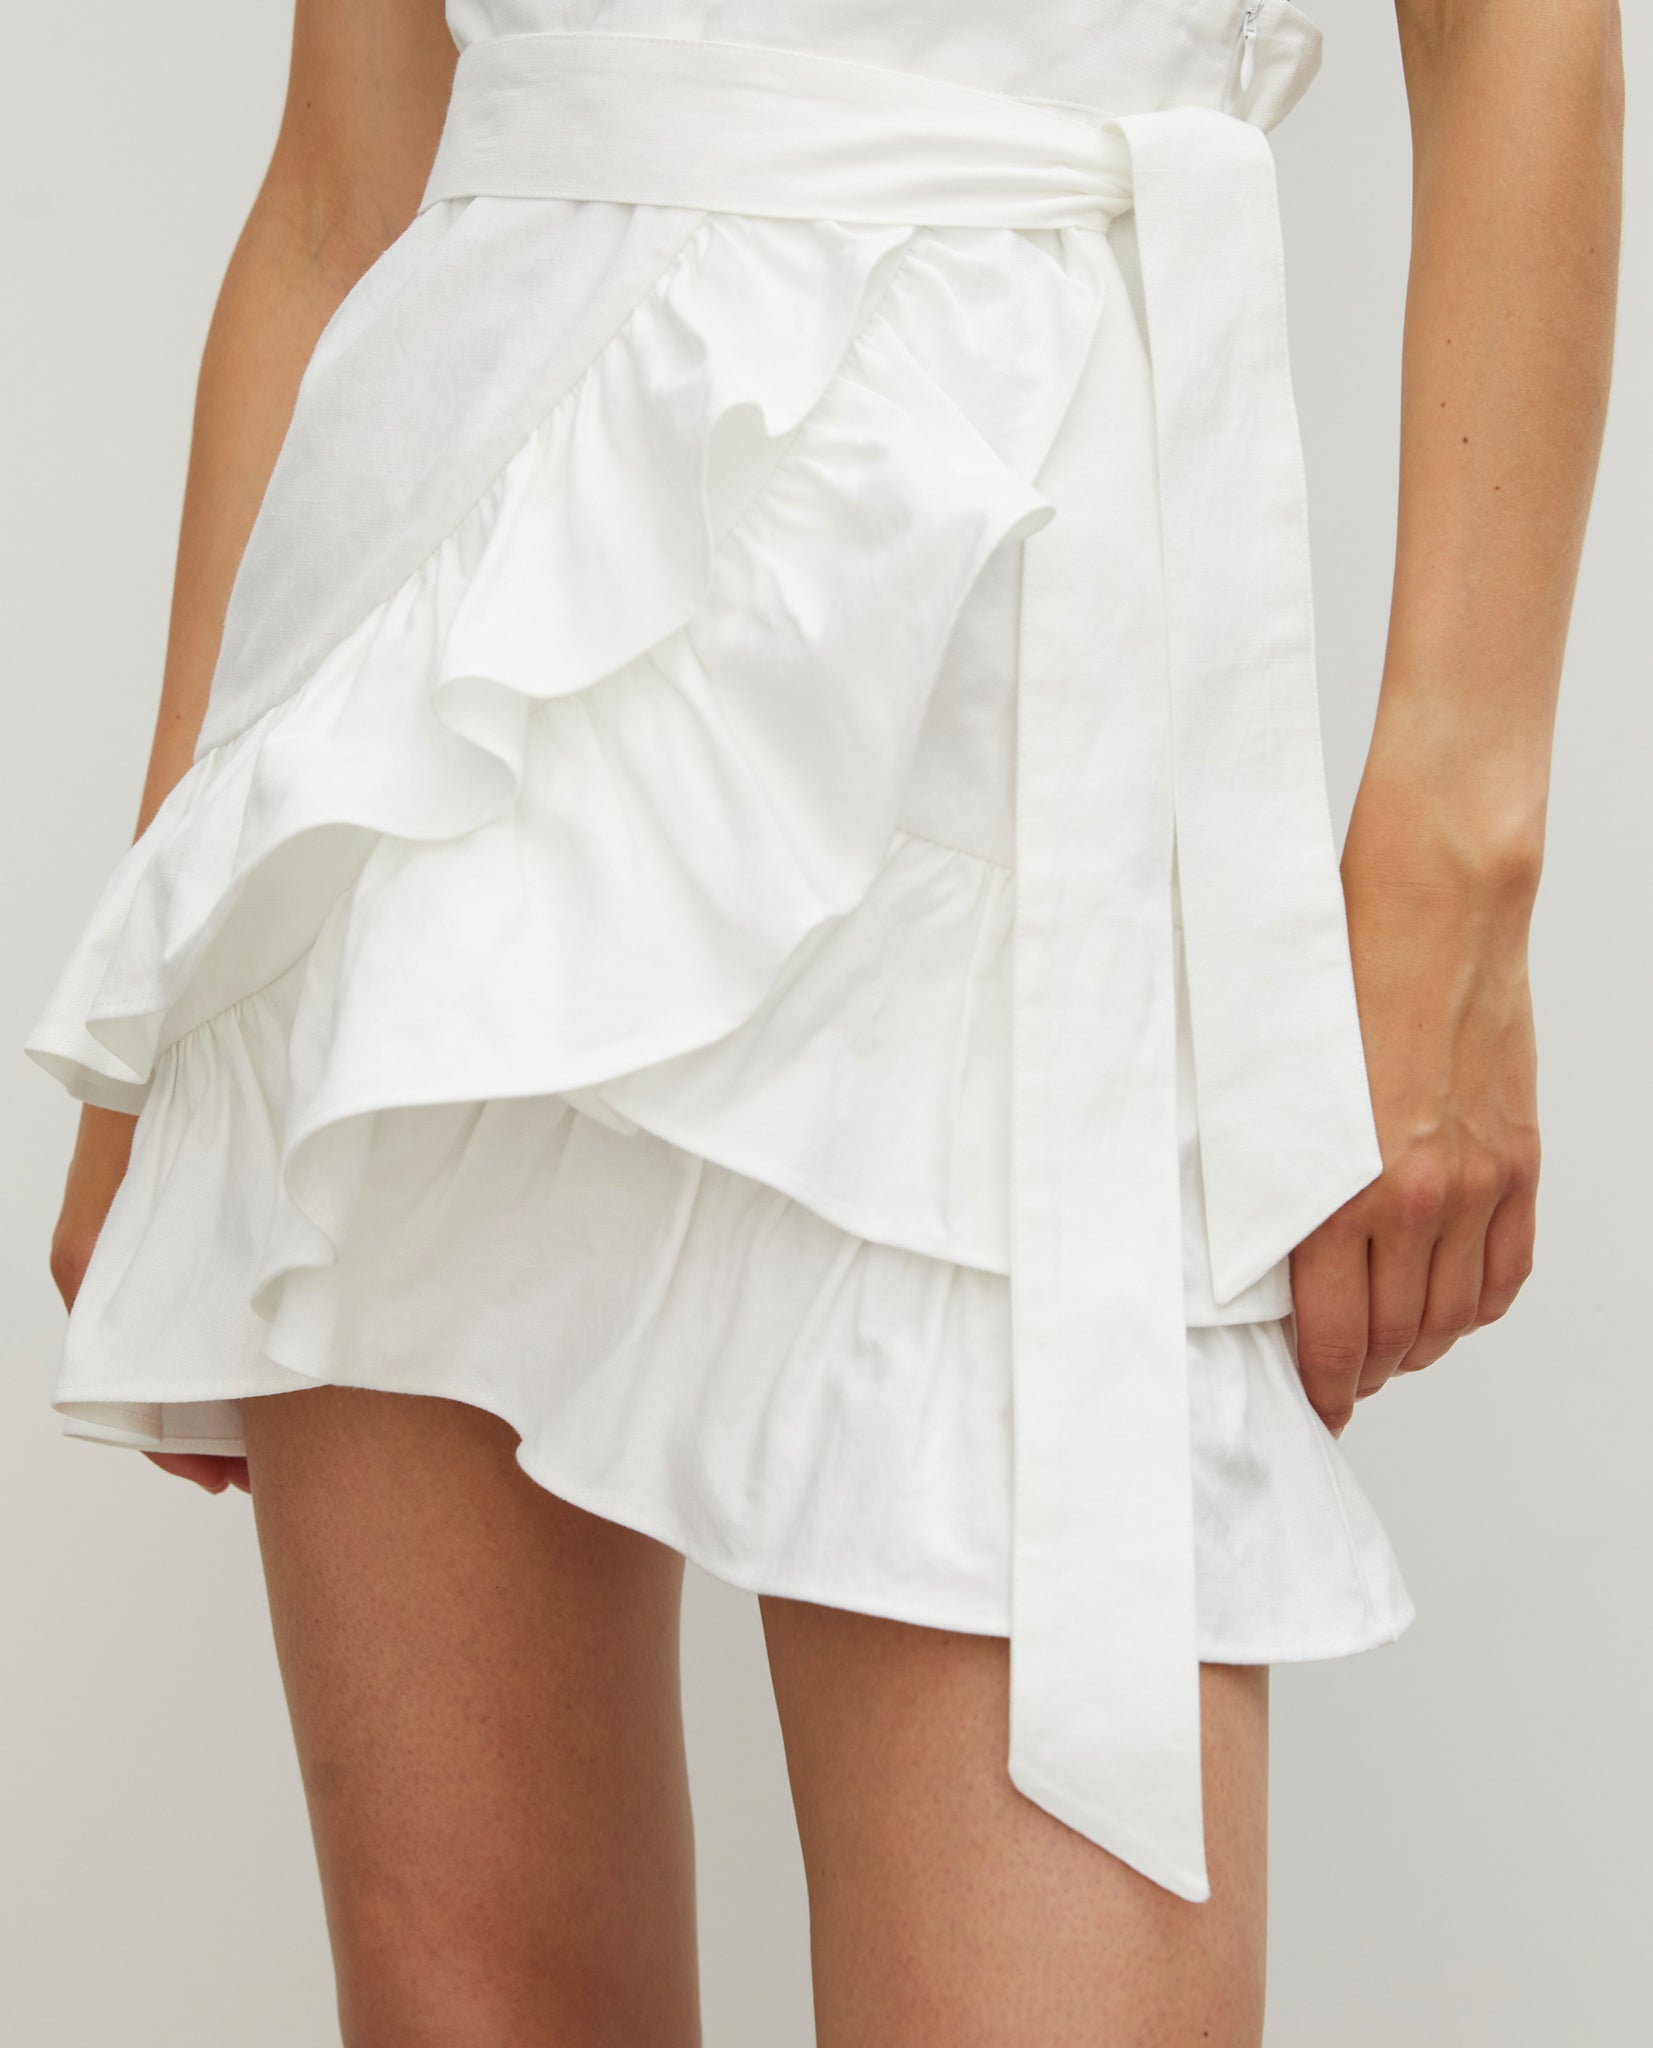 Mazia skirt in white by Róhe